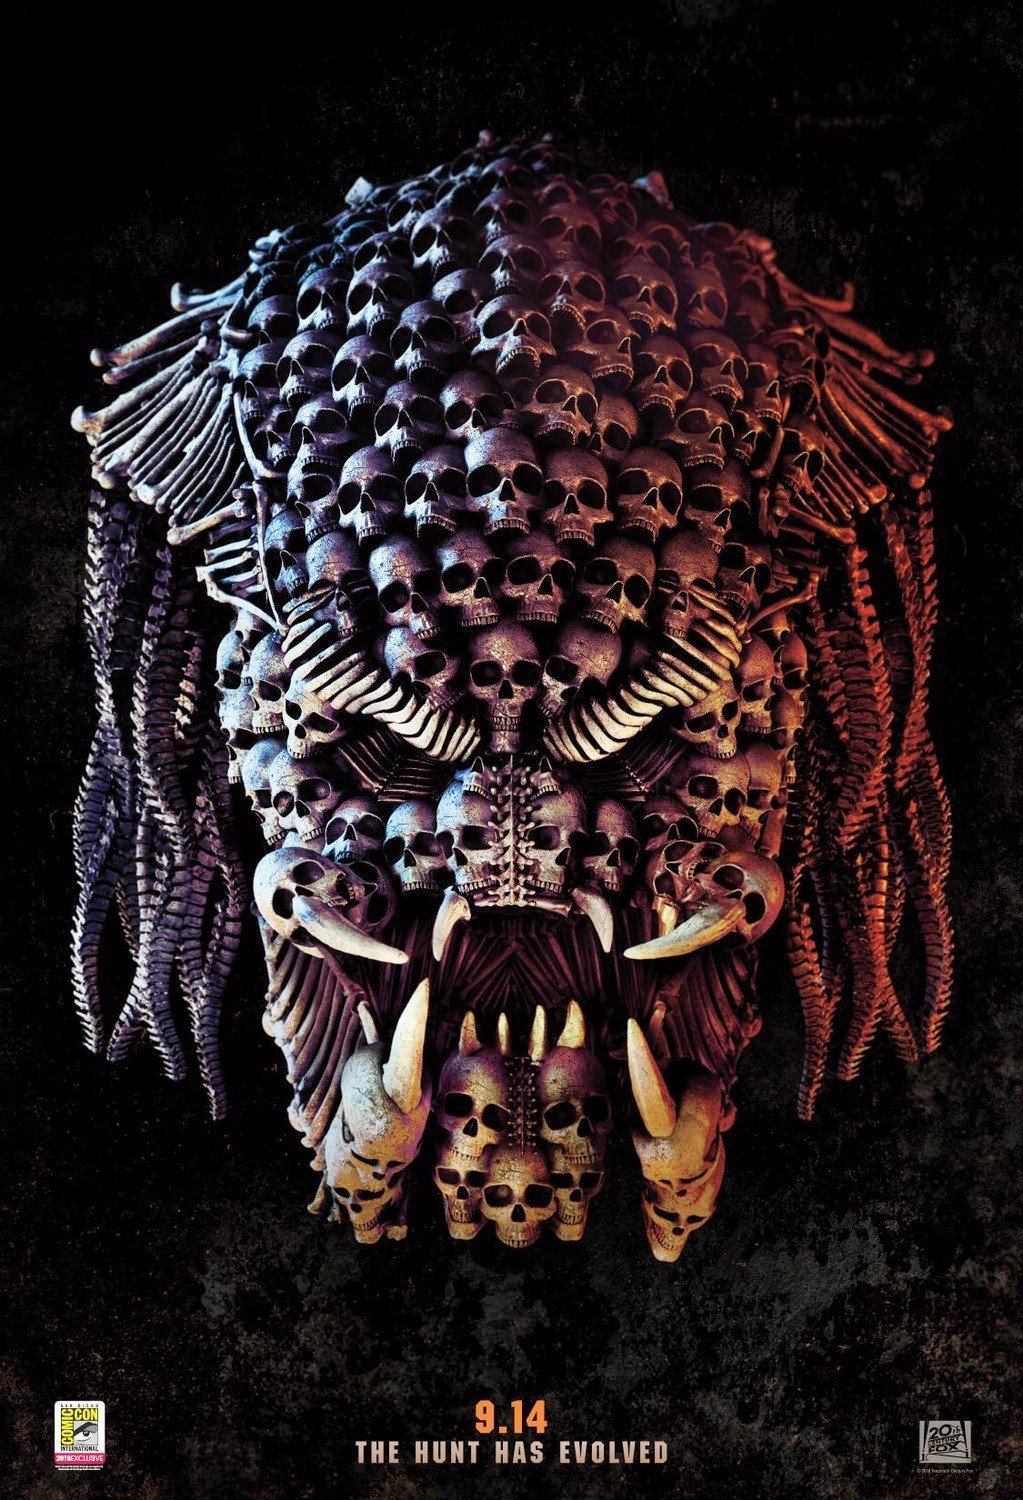 Poster of 20th Century Fox's The Predator (2018)